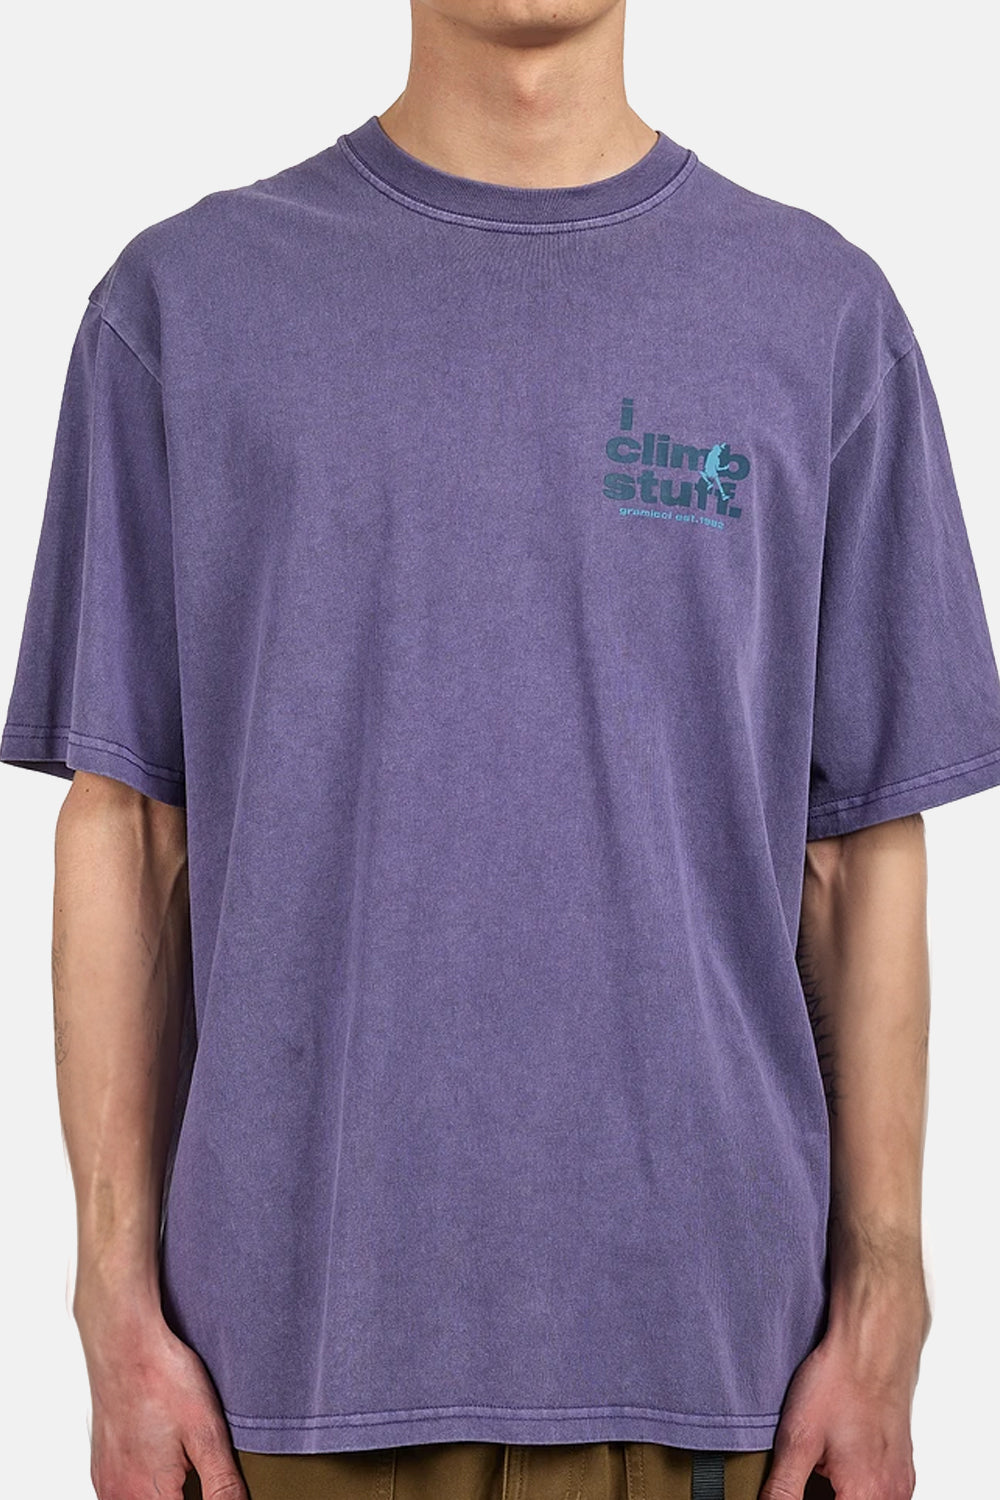 Gramicci I Climb Stuff T-shirt (lilla pigment)